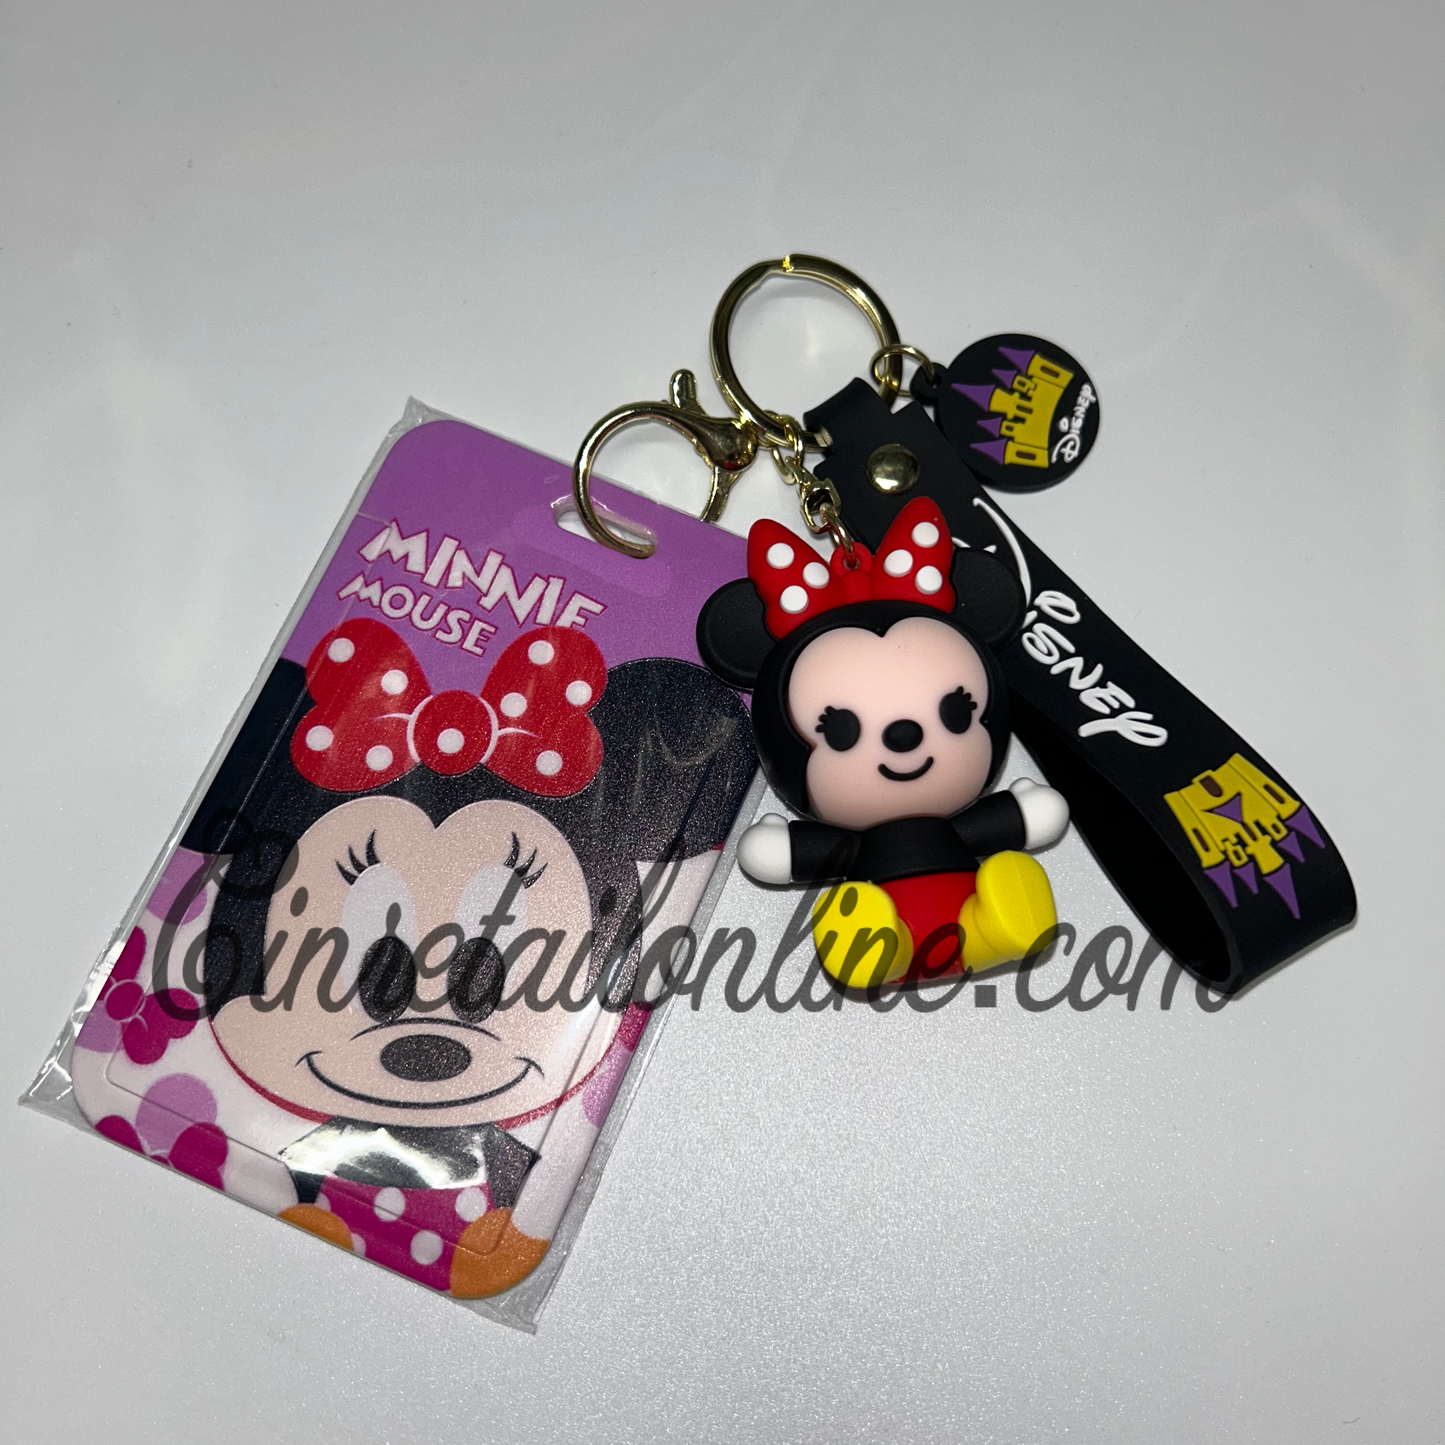 Minnie Mouse keychain